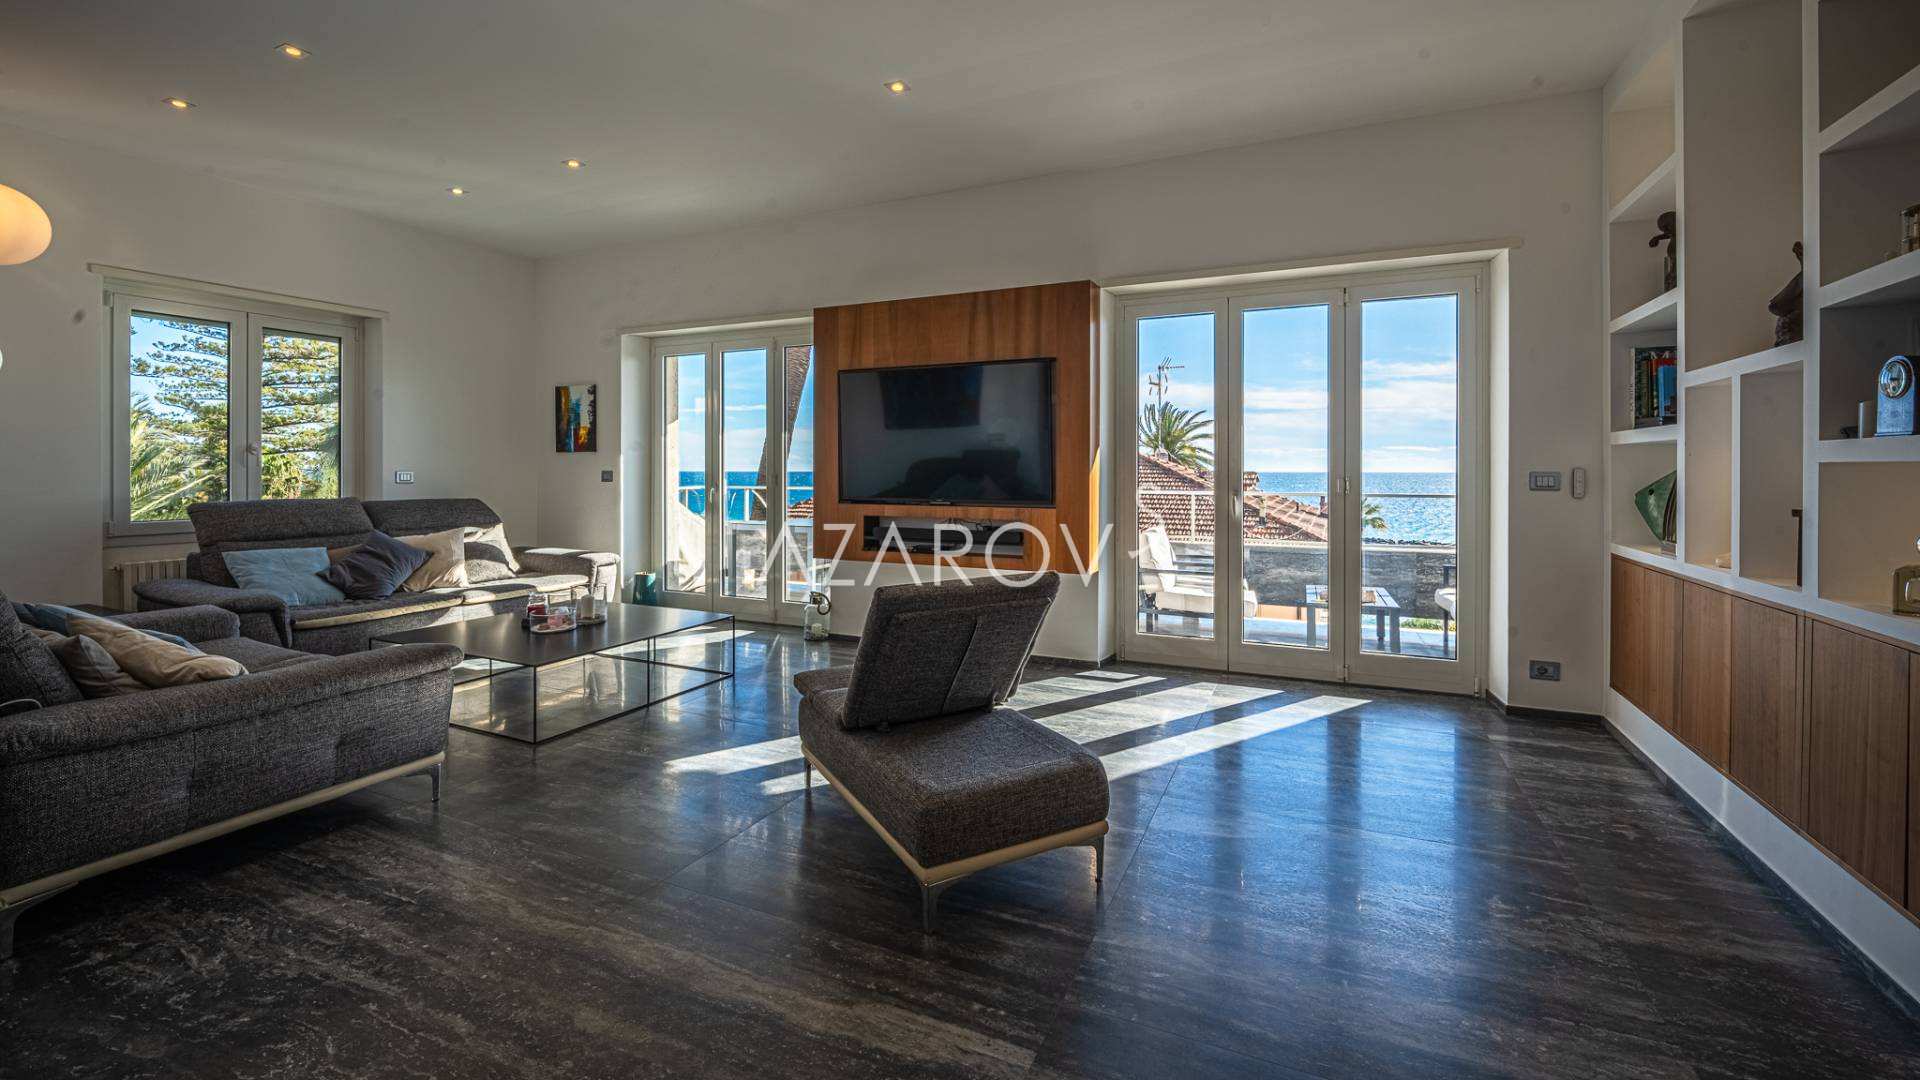 135 qm Wohnung am Meer in Sanremo